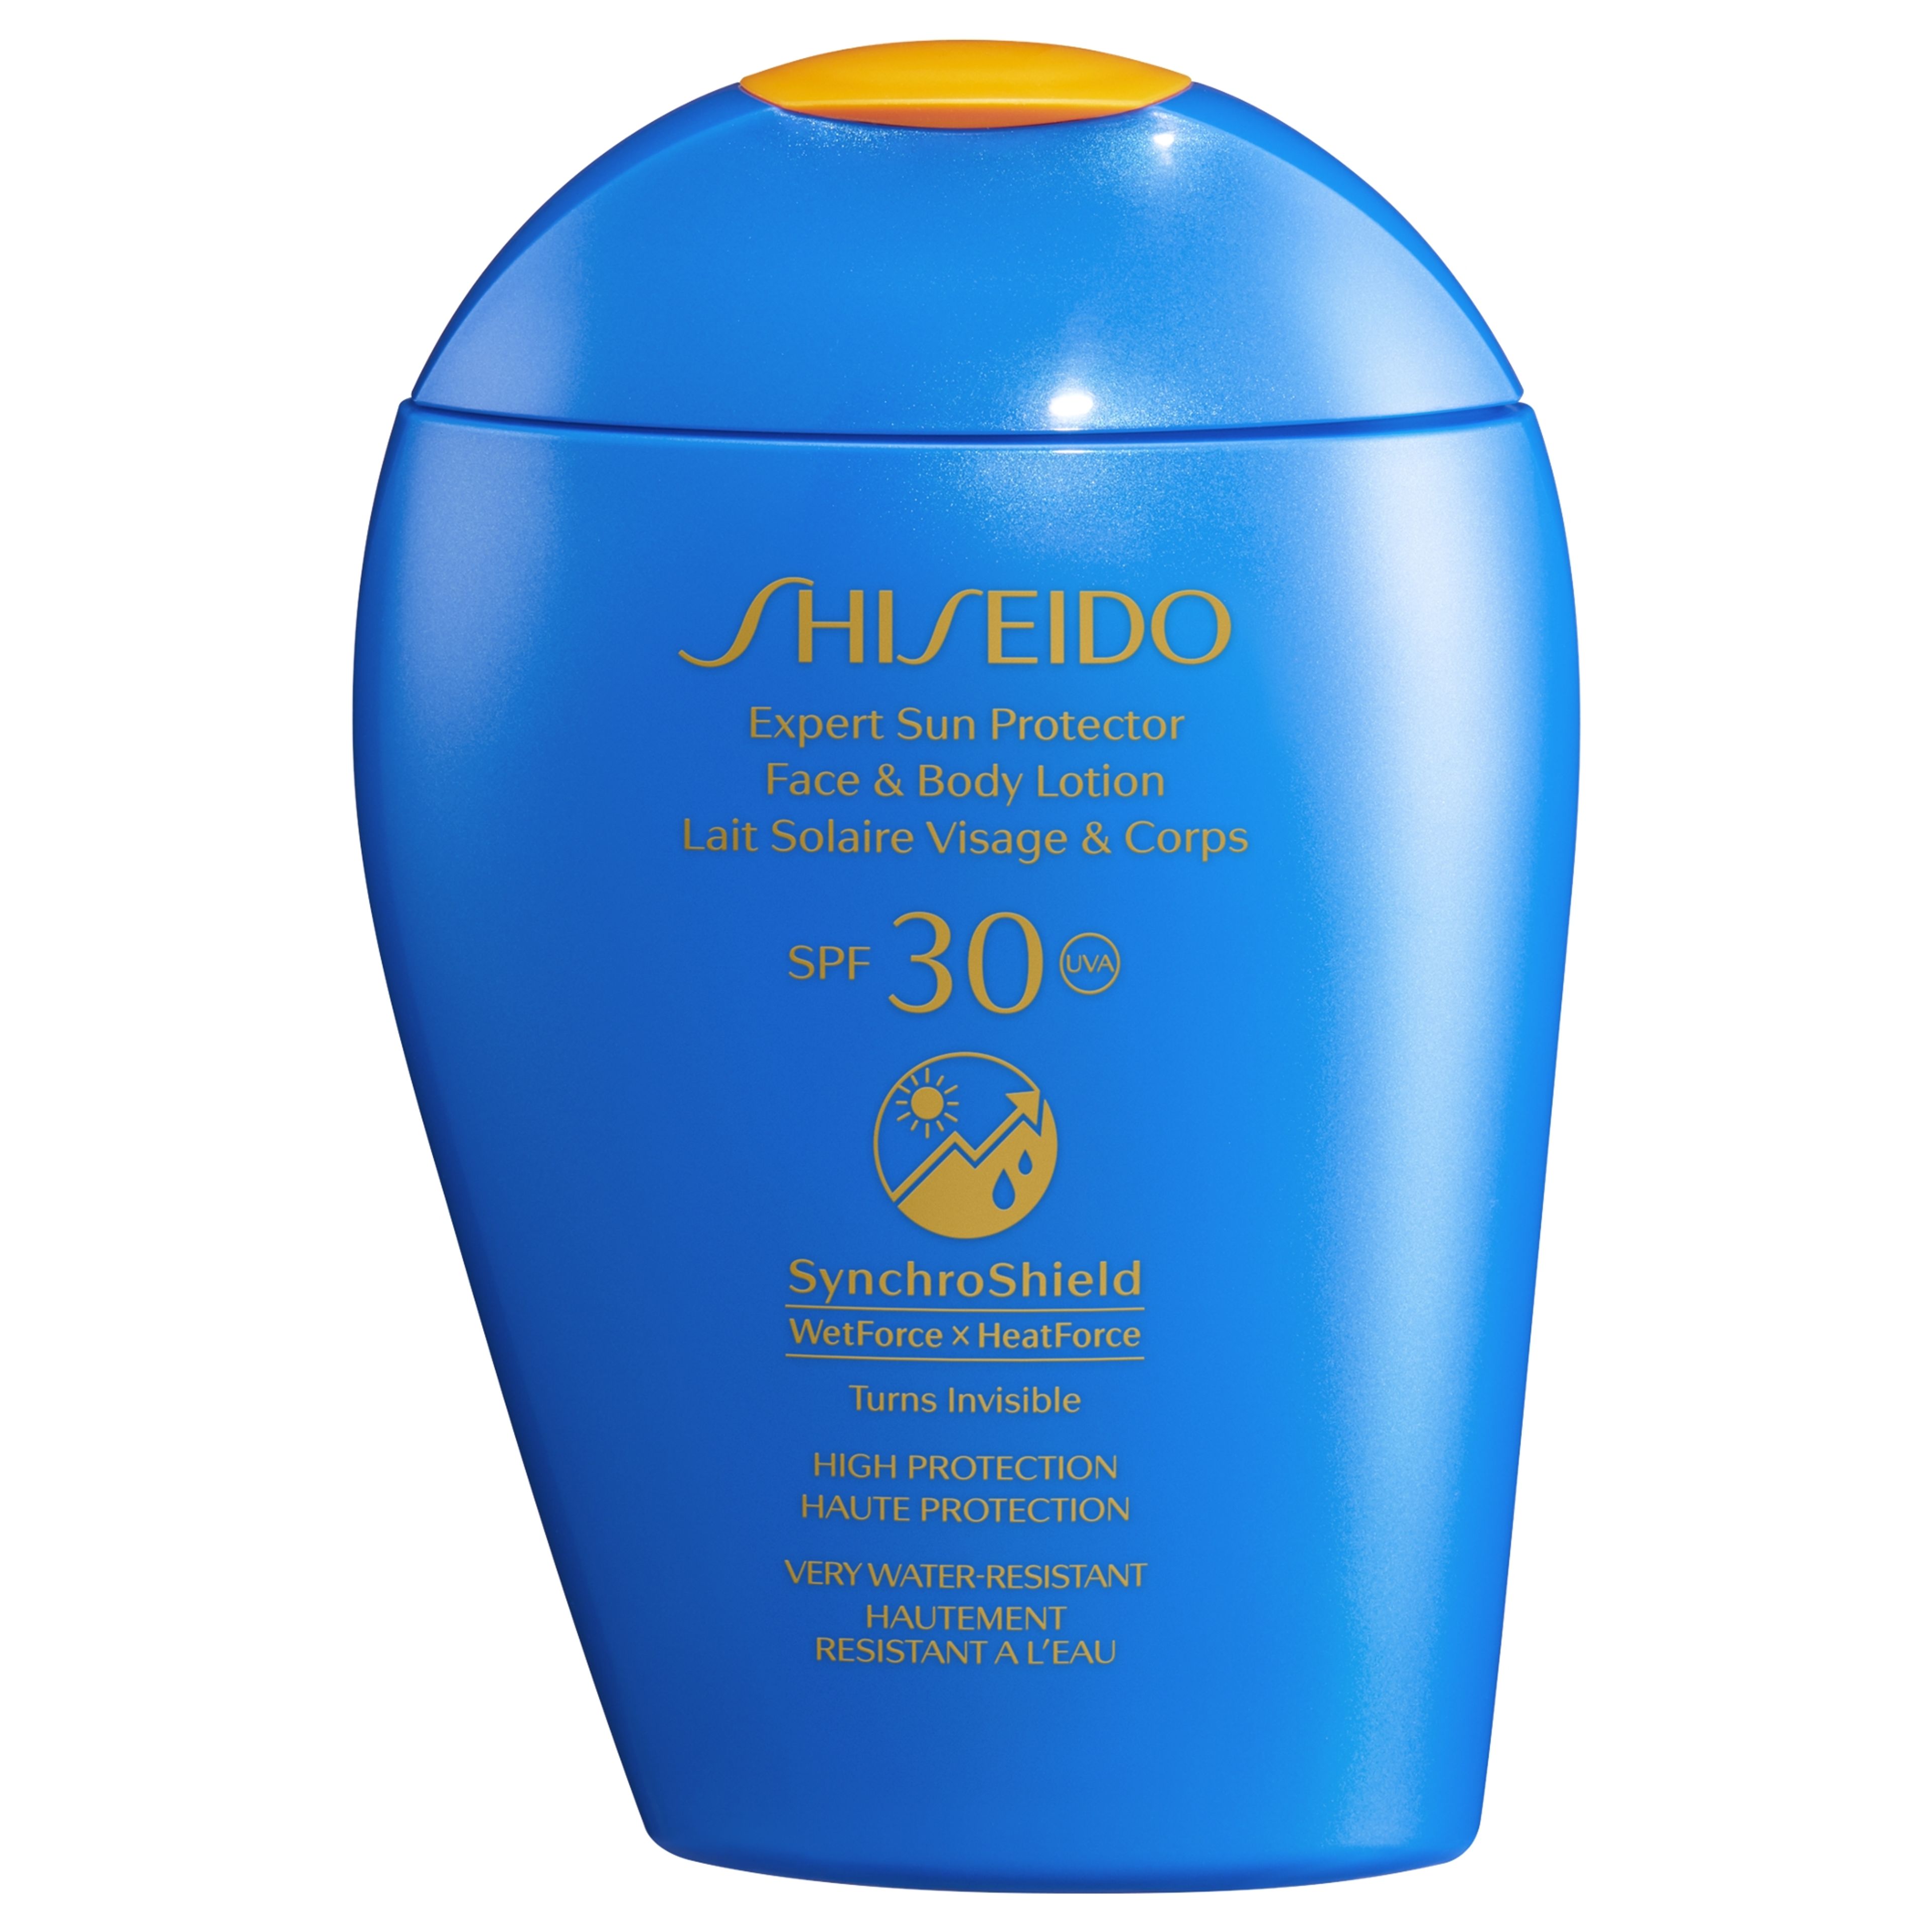 Shiseido Expert Sun Protector
face And Body Lotion 
spf30 1